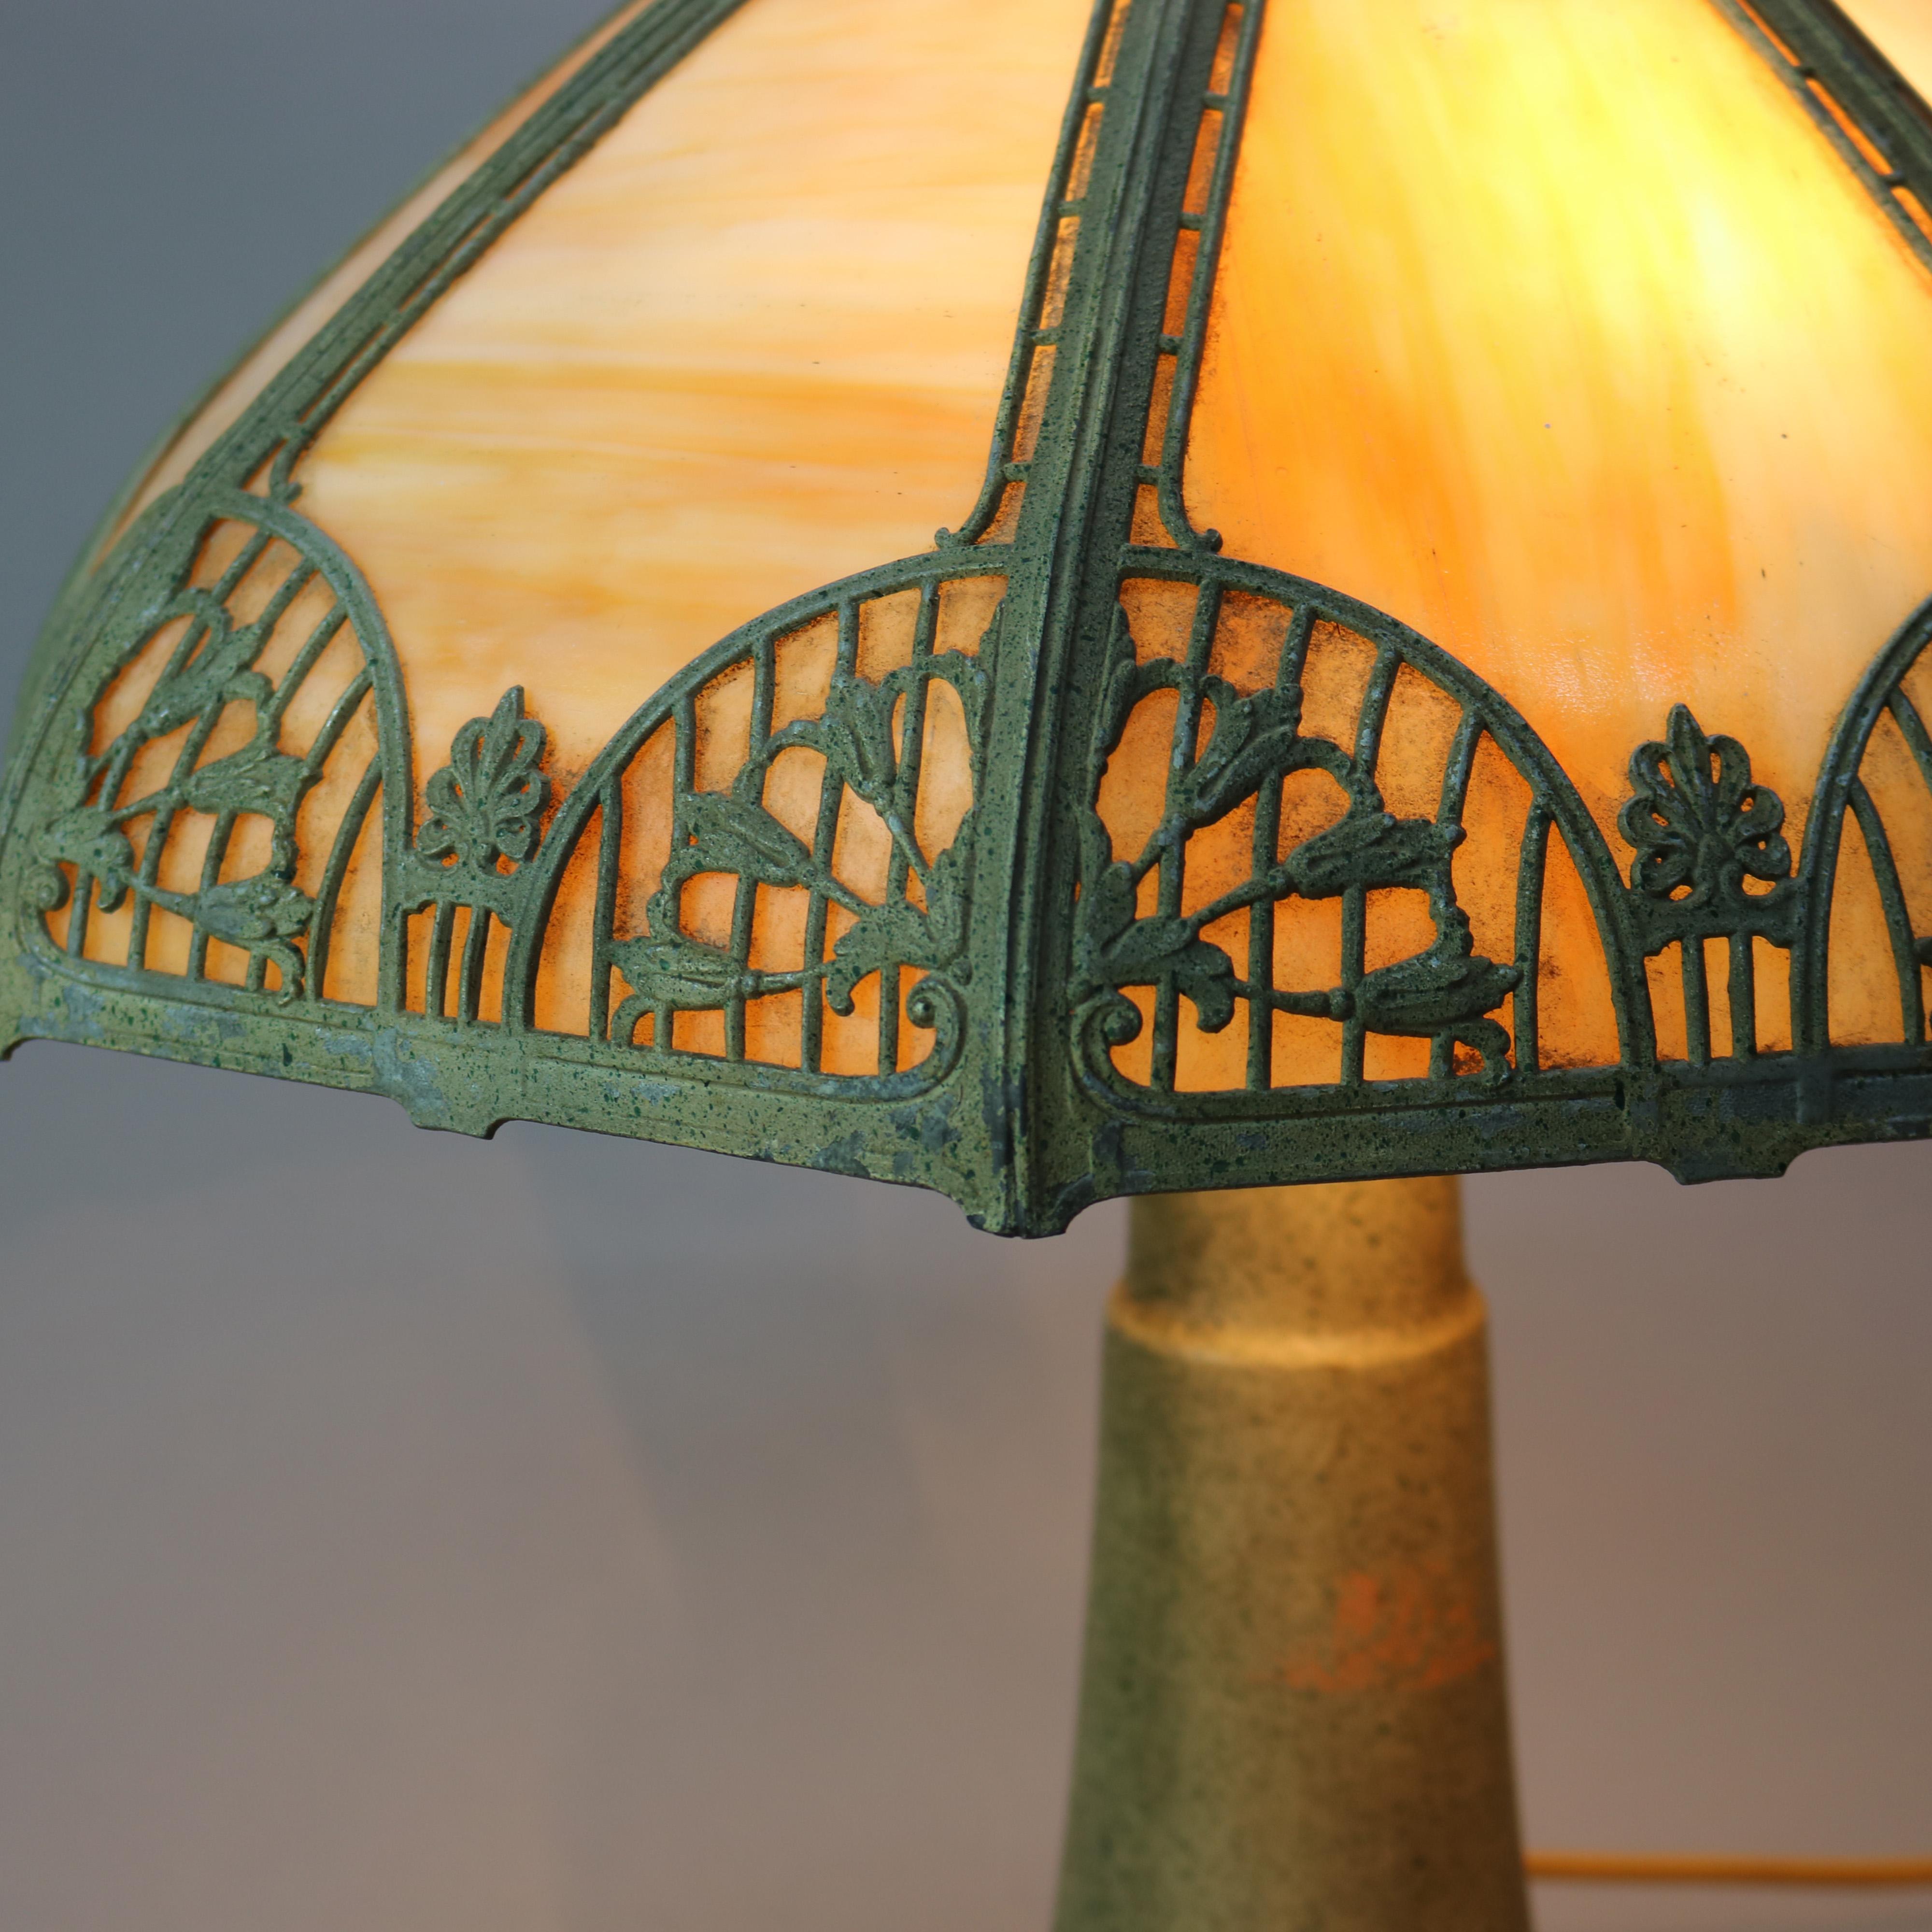 bradley and hubbard lamp models